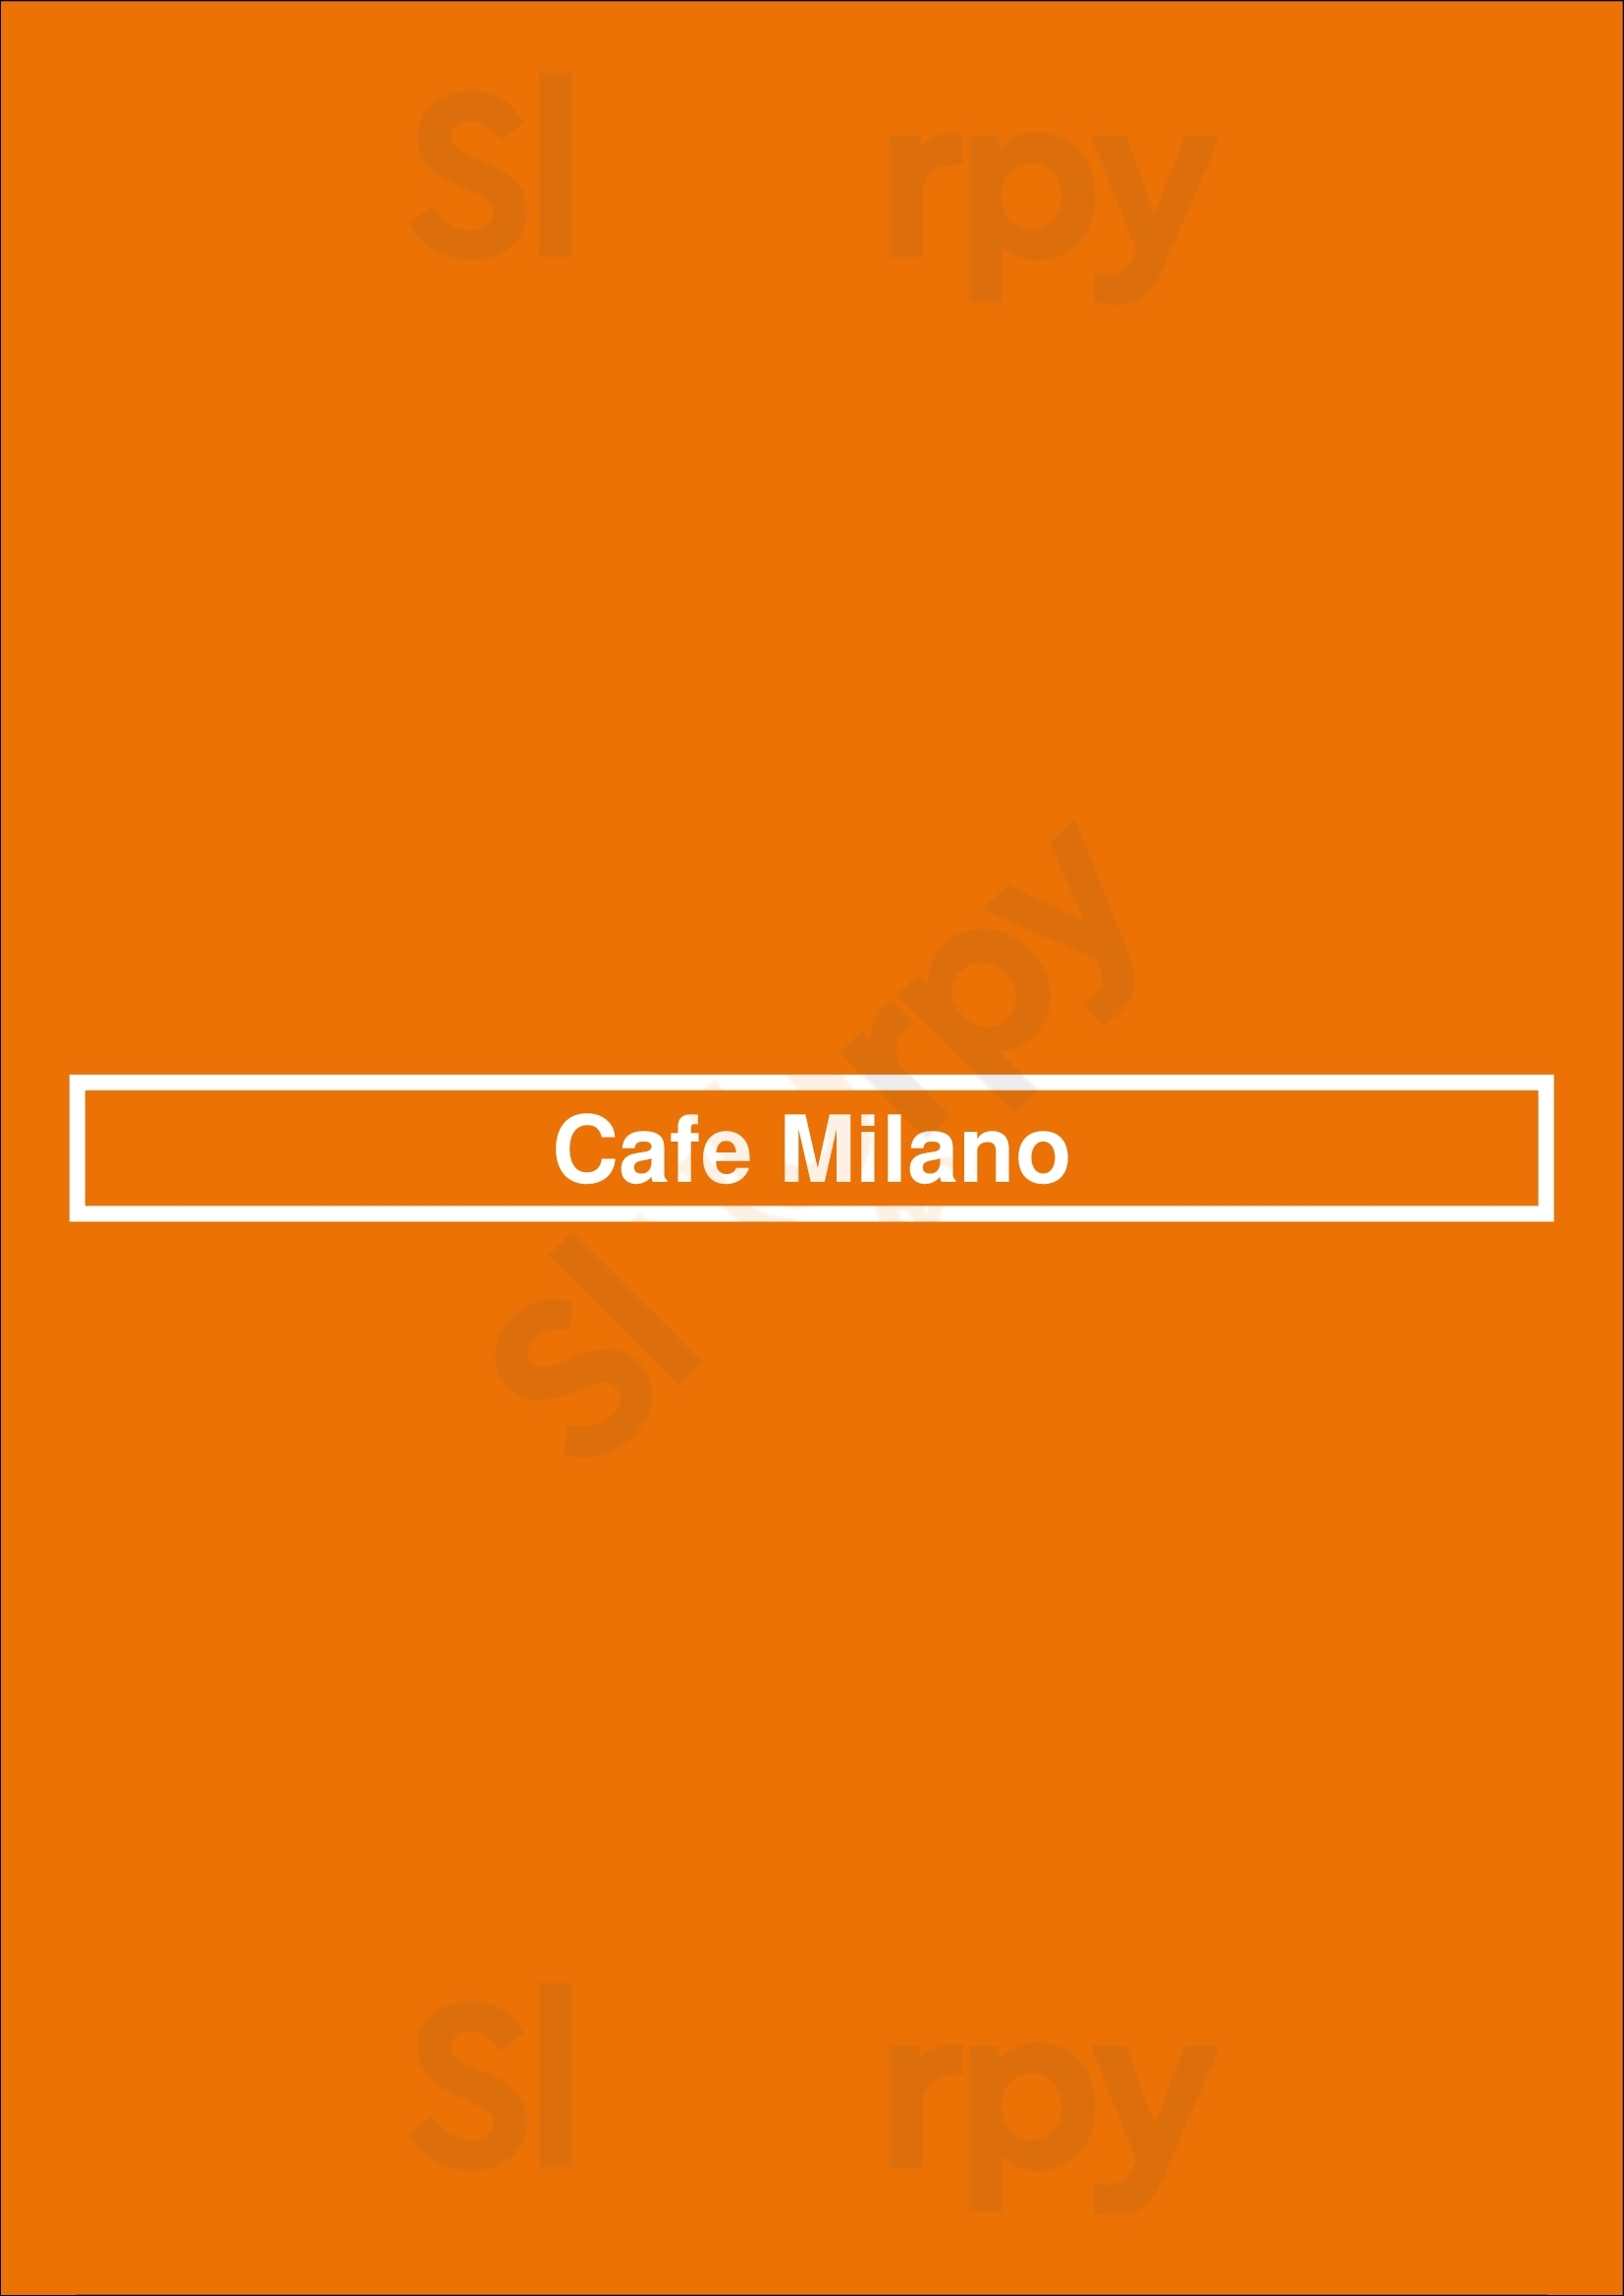 Caffe Milano Miami Beach Miami Beach Menu - 1